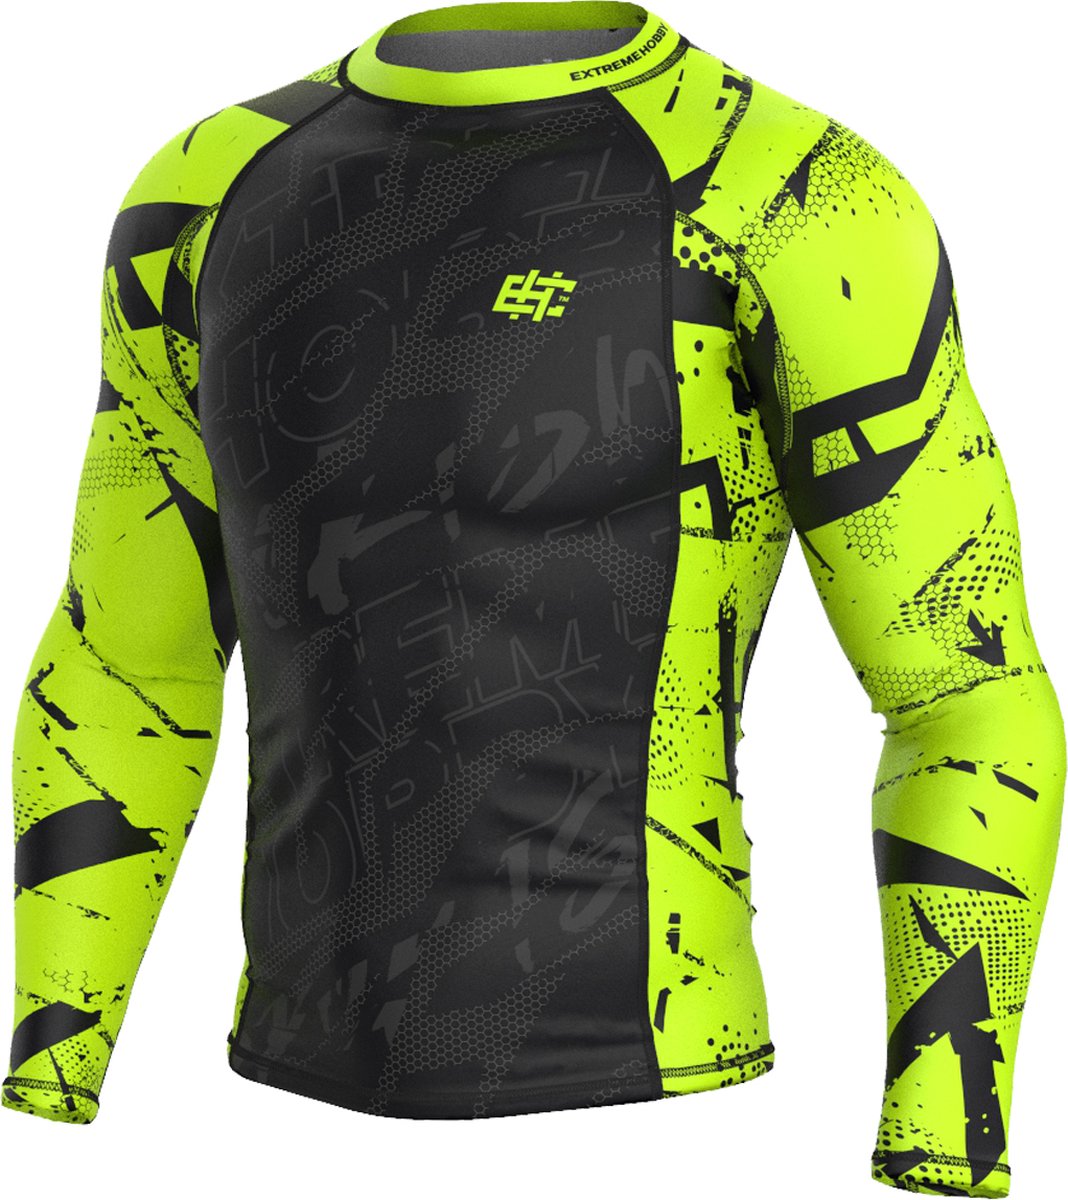 Extreme Hobby - Neo Lime - Rashguard Long Sleeve - Compression Shirt - Zwaart, Lime - Maat M